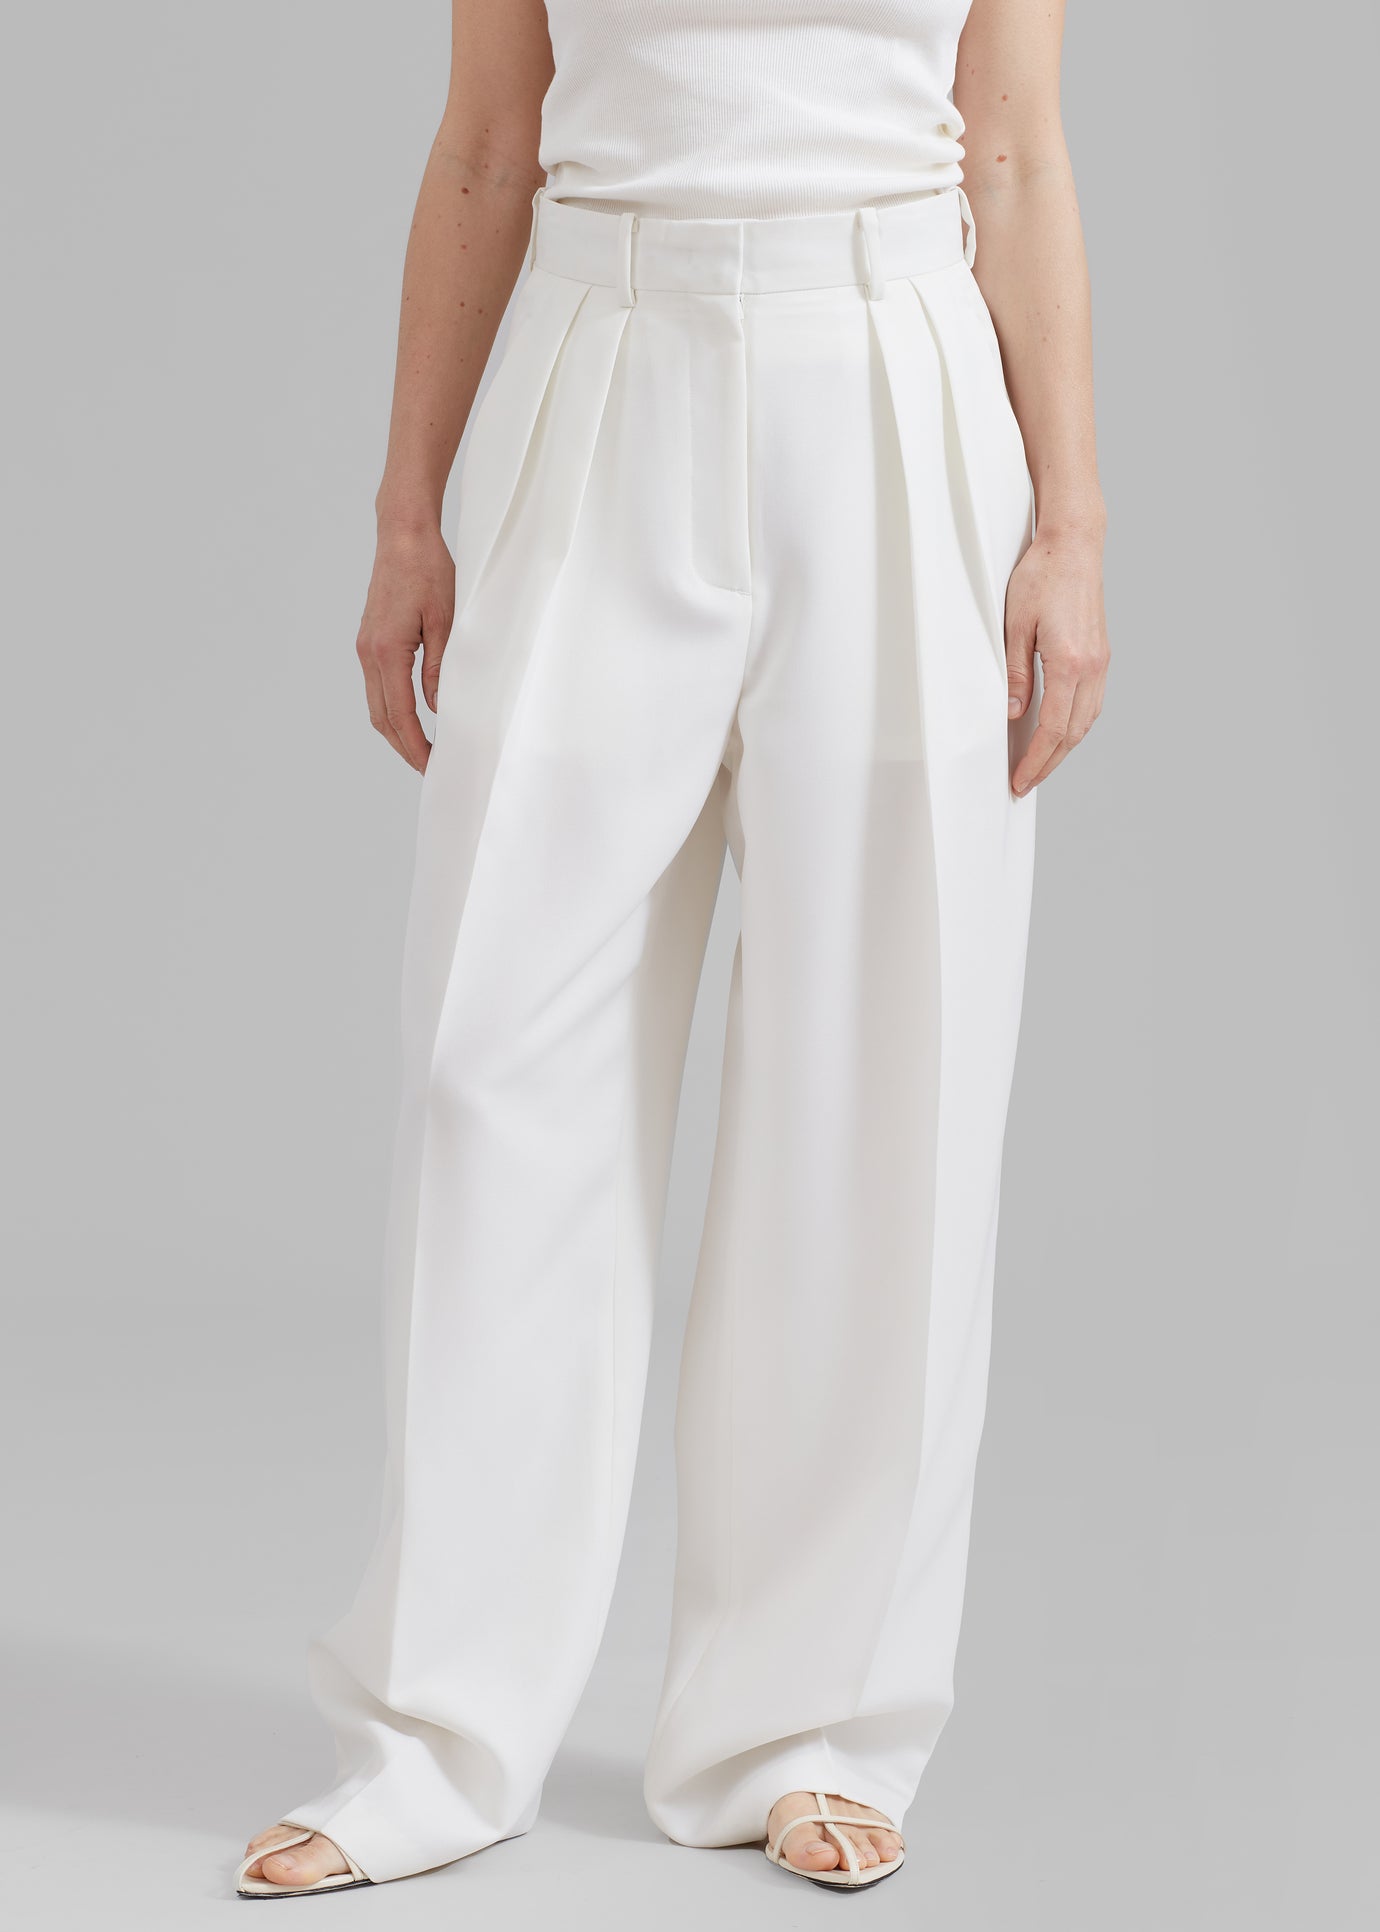 Zia Pintuck Trousers - White - 1